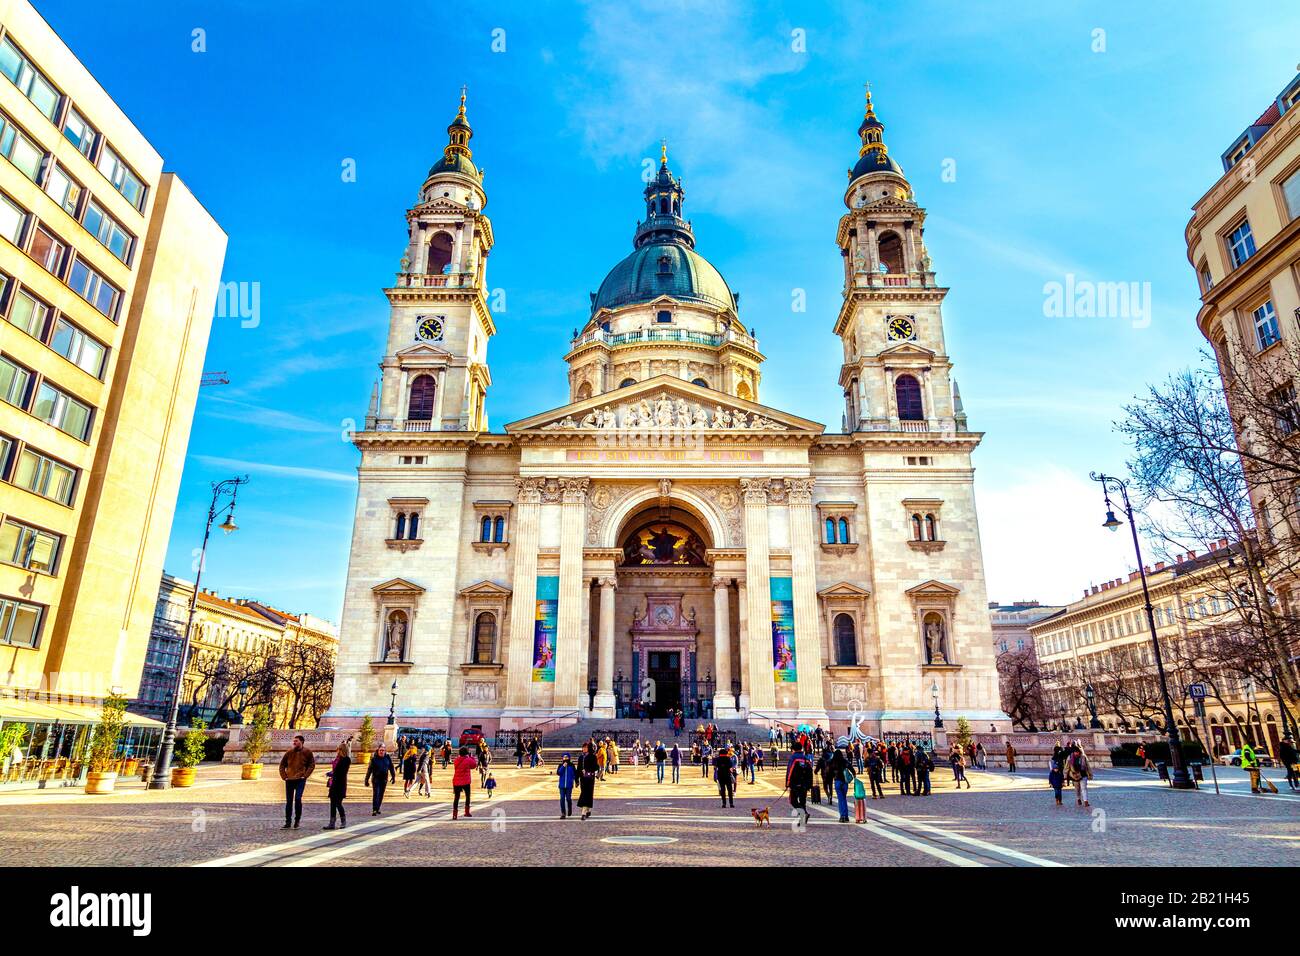 Exterior of St. Stephen's Basilica, Budapest, Hungary Stock Photo